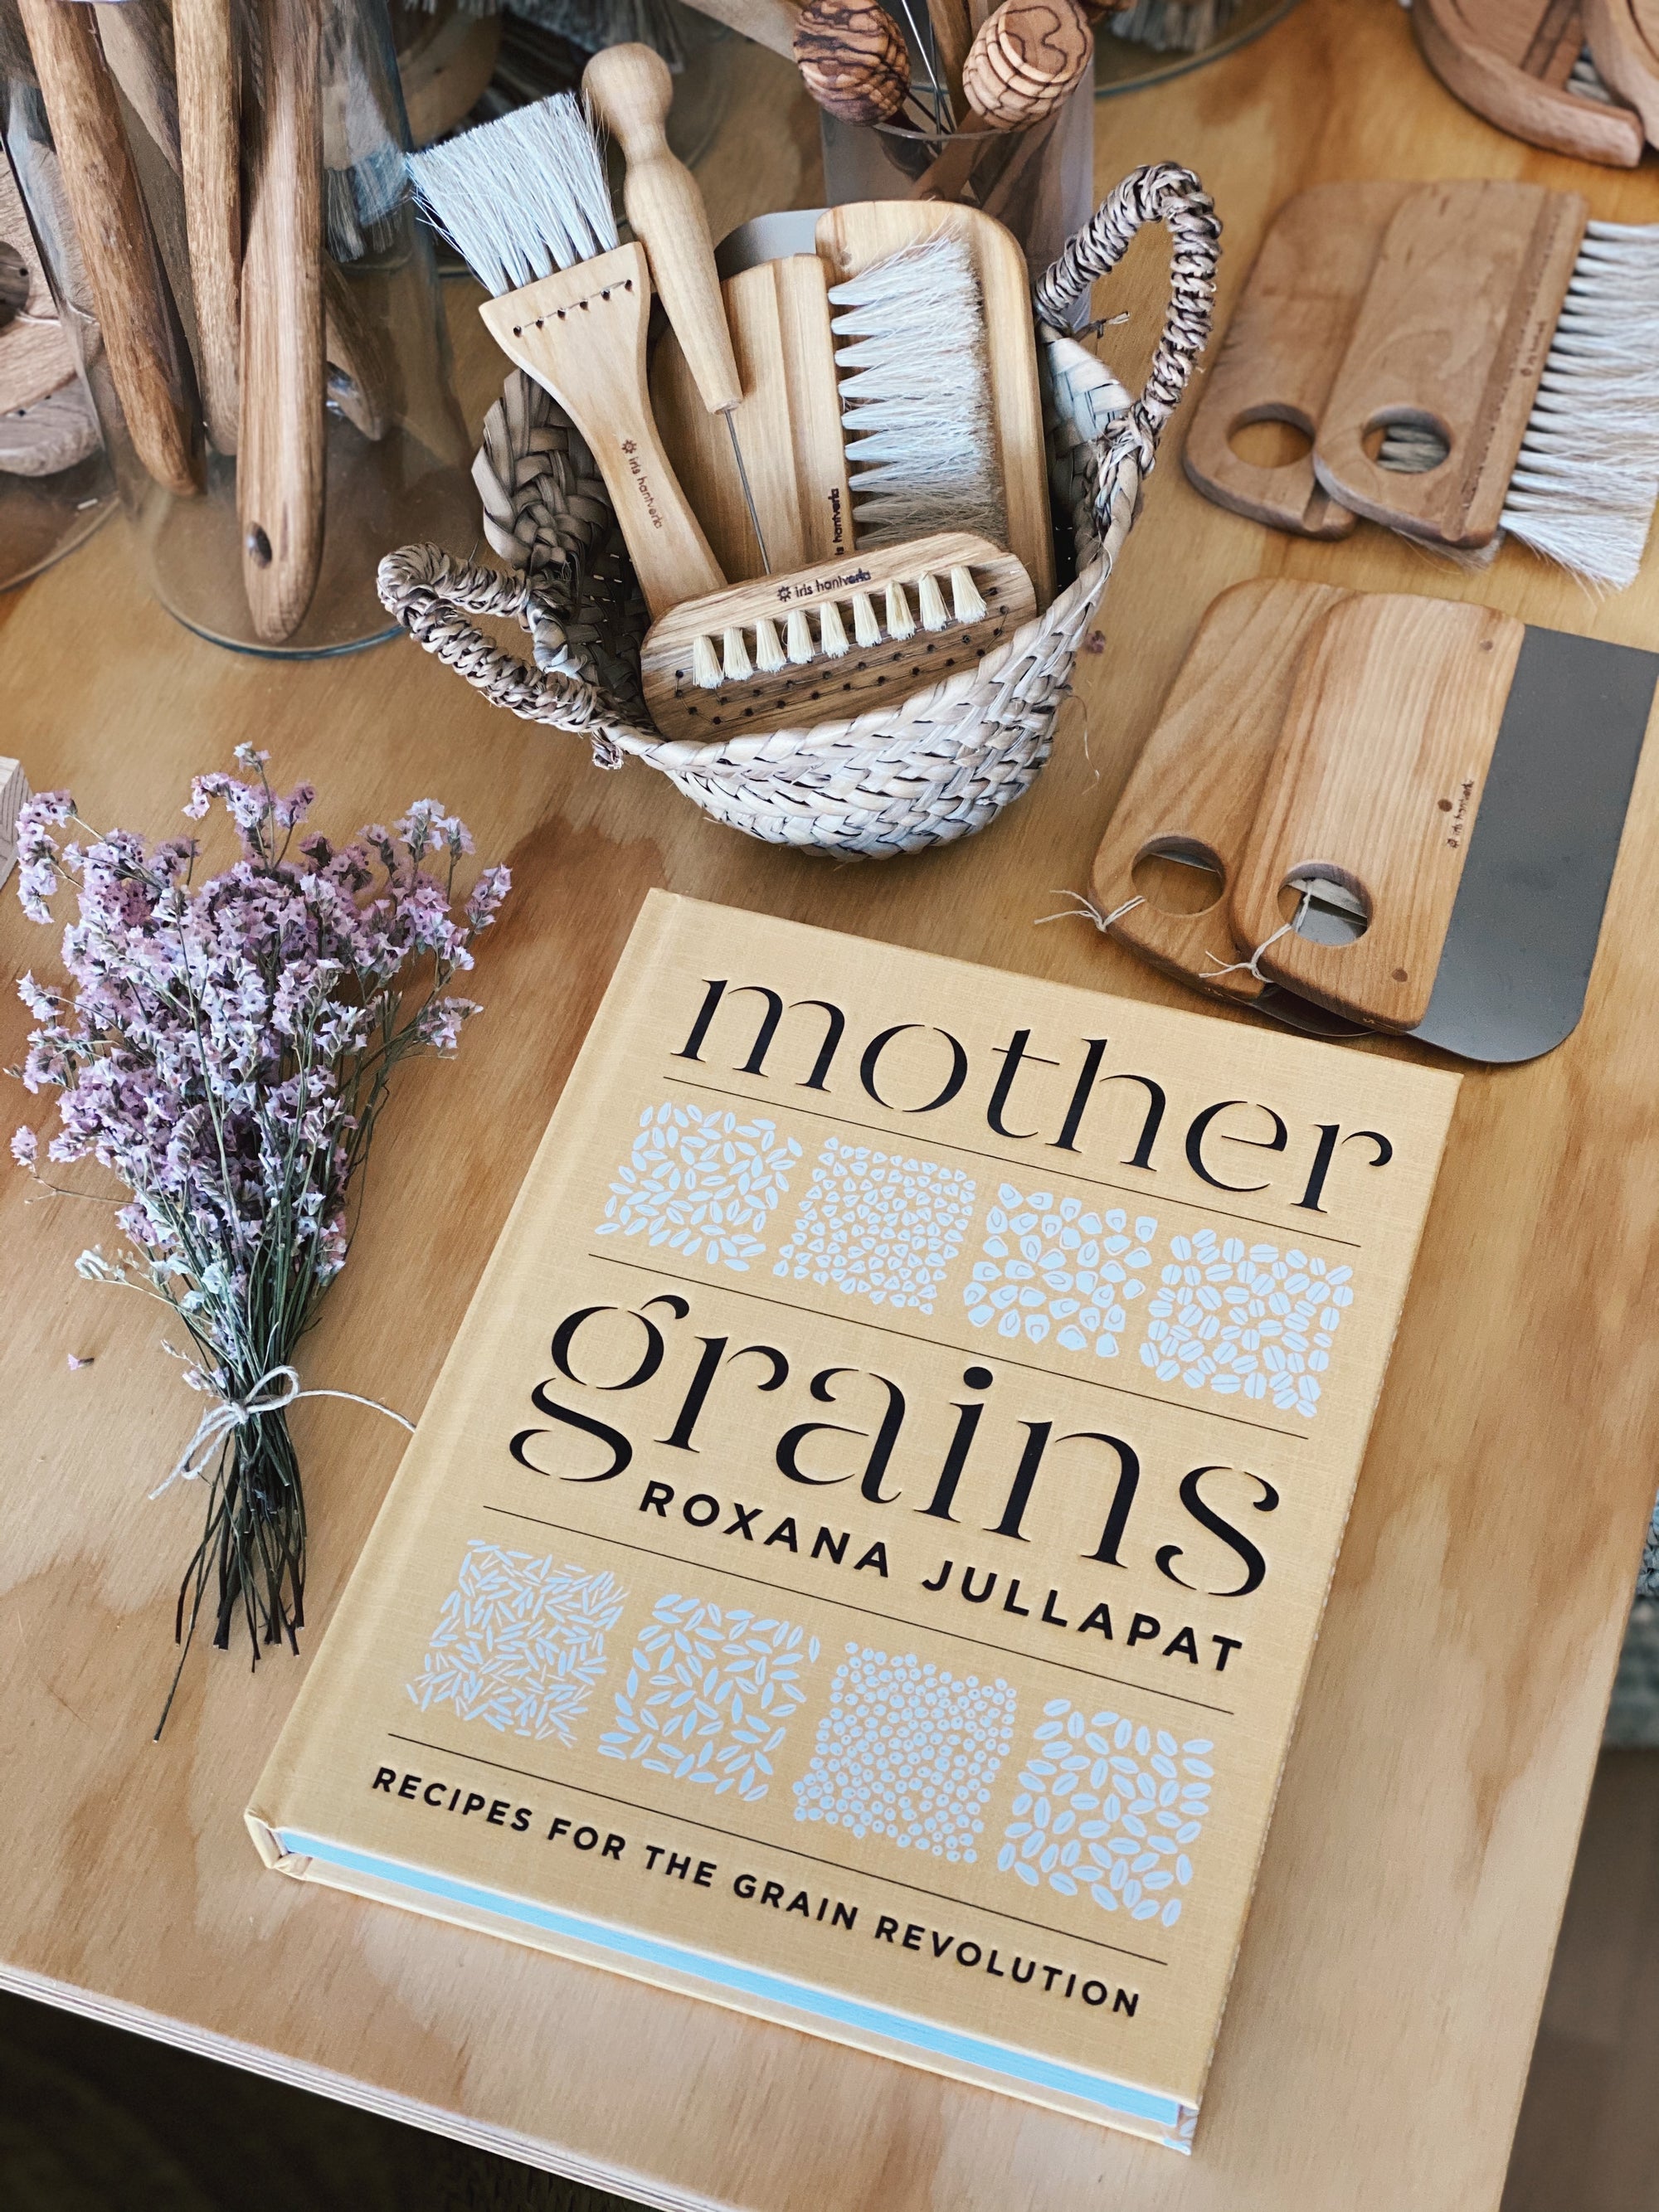 Mother Grains Cookbook